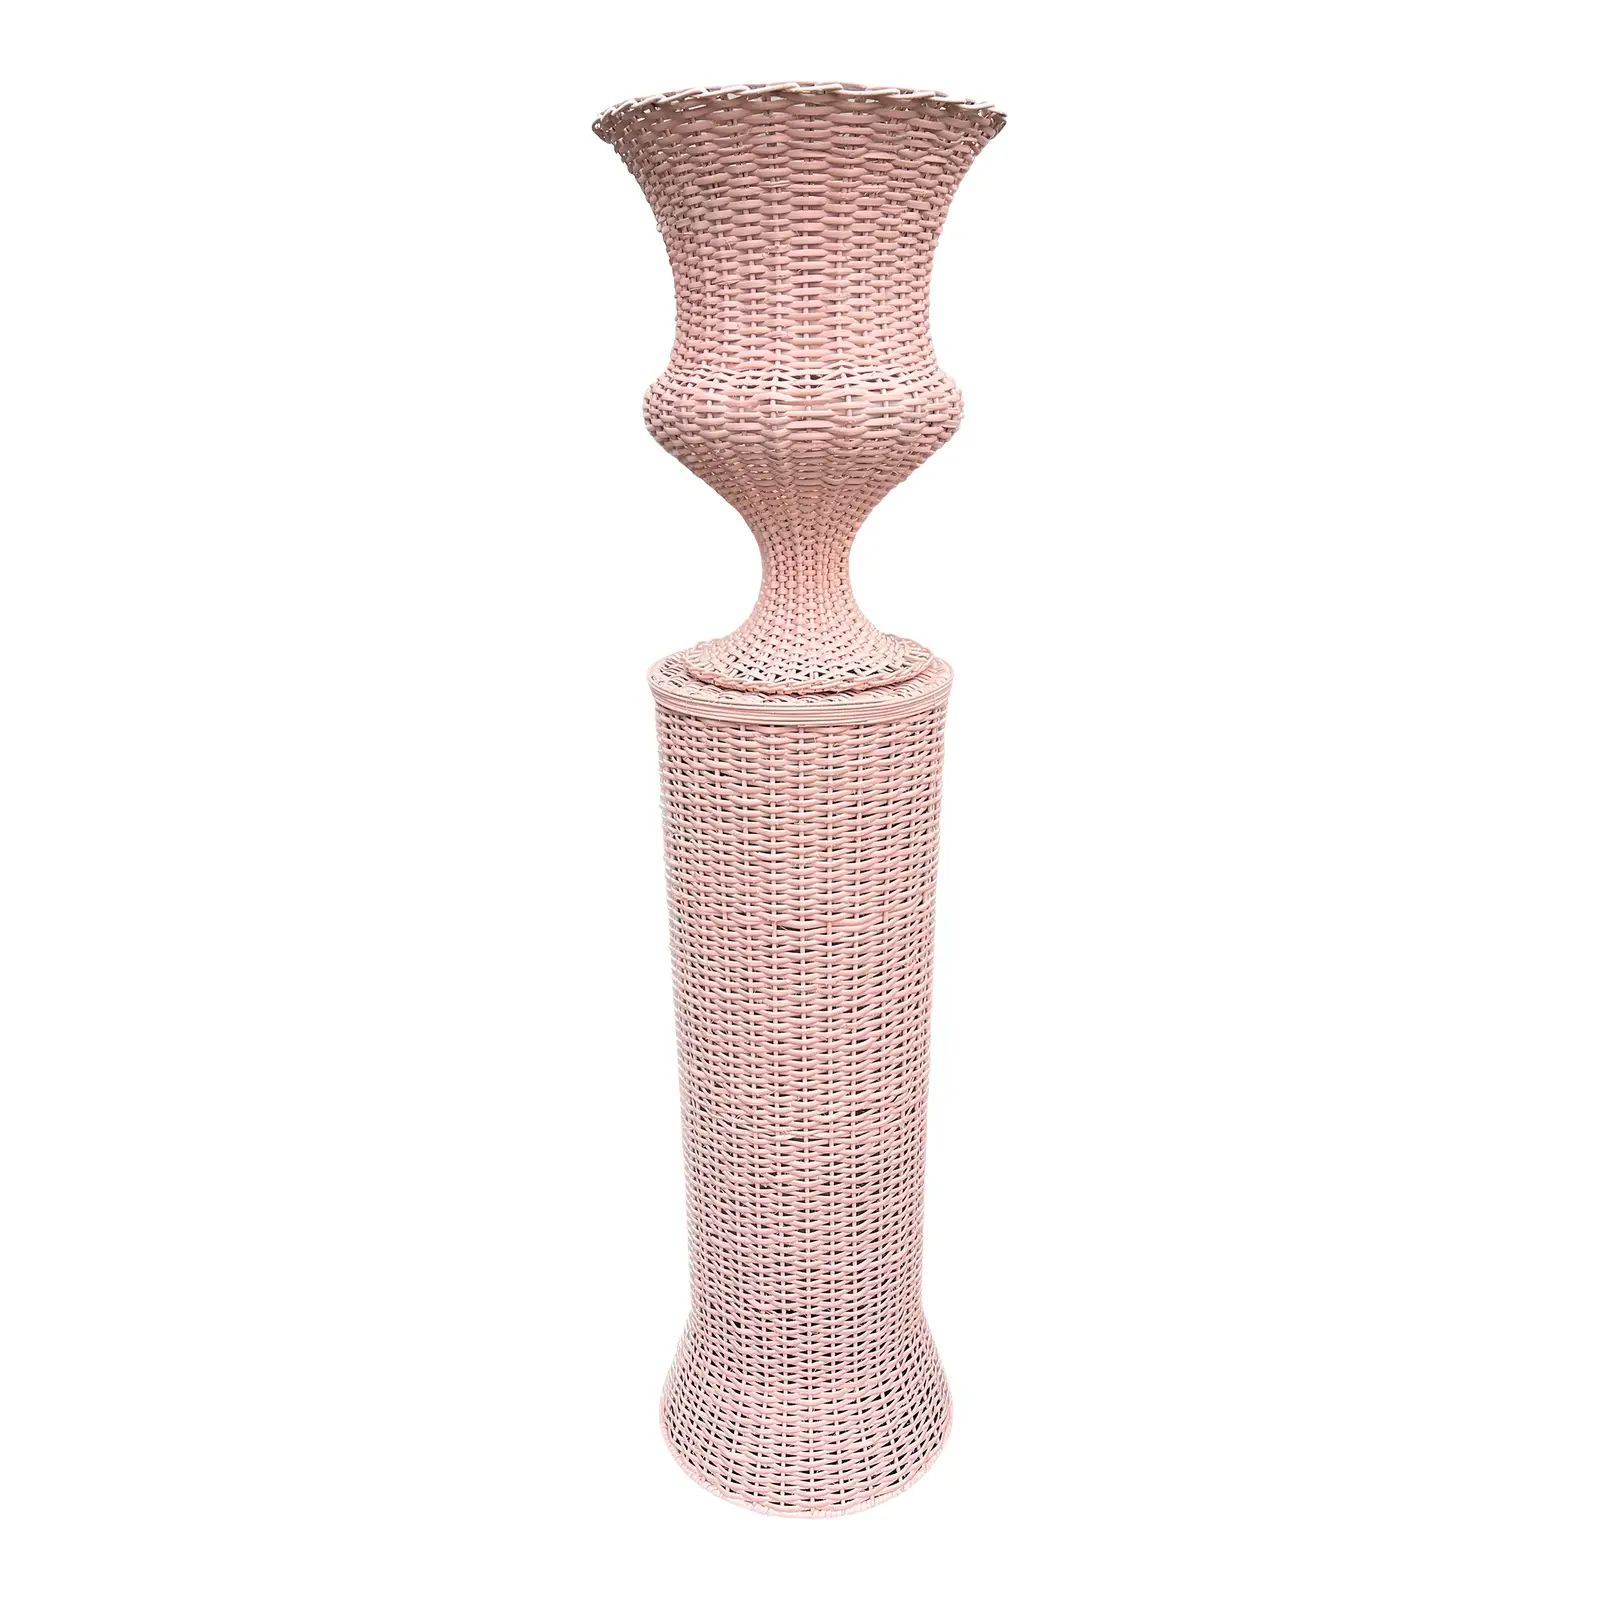 Wicker Urn And Pedestal, Pale Pink | Chairish